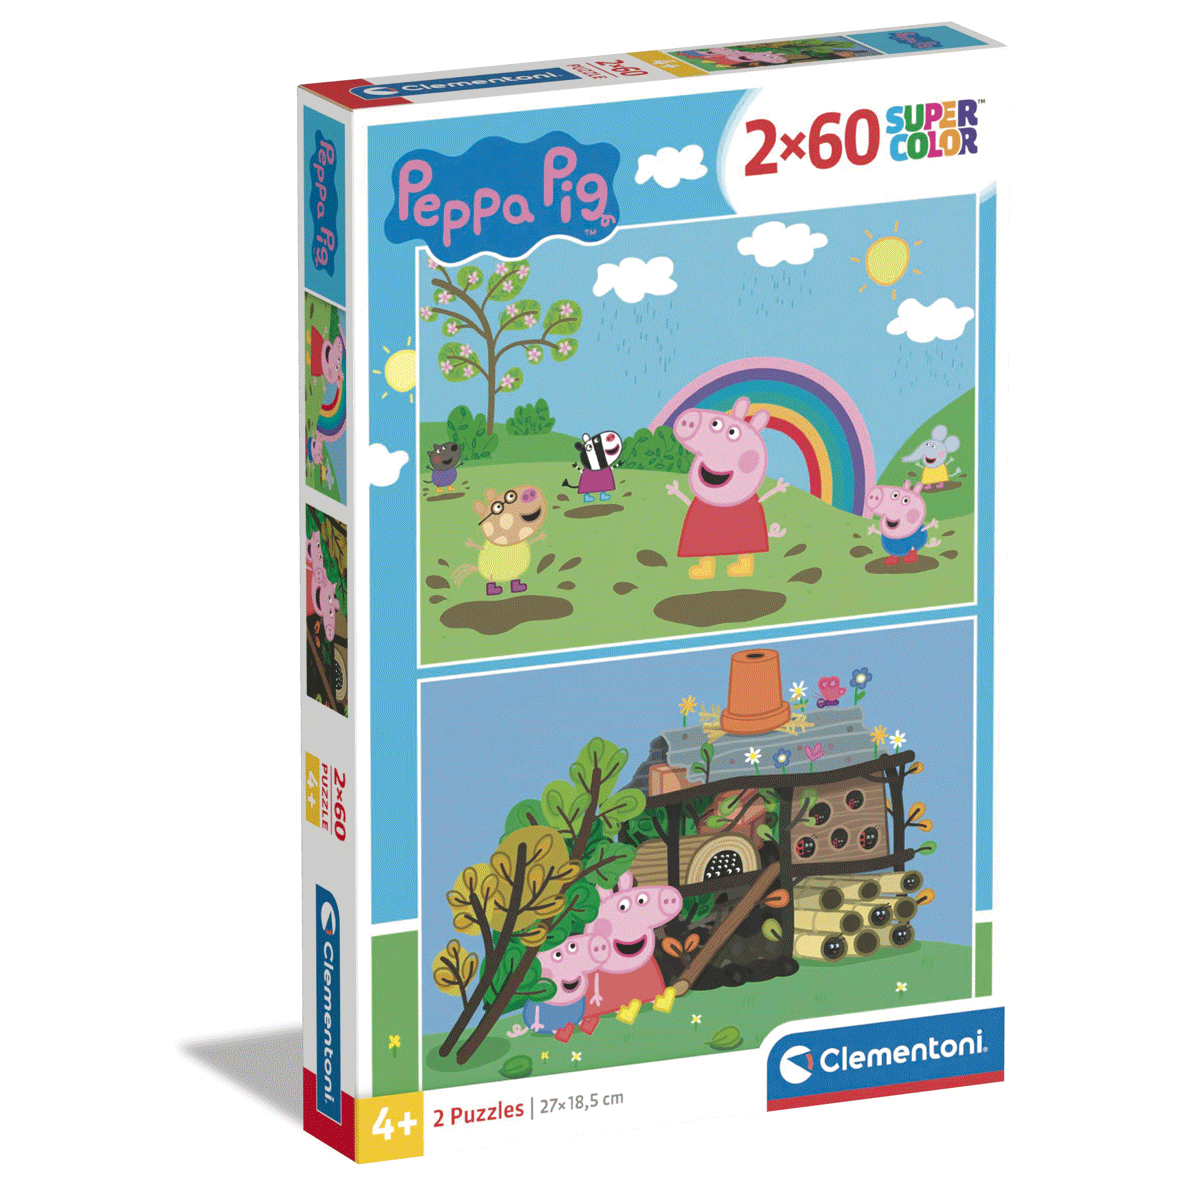 Clementoni supercolor puzzle - peppa pig - 2x60 pezzi, puzzle bambini 5 anni - CLEMENTONI